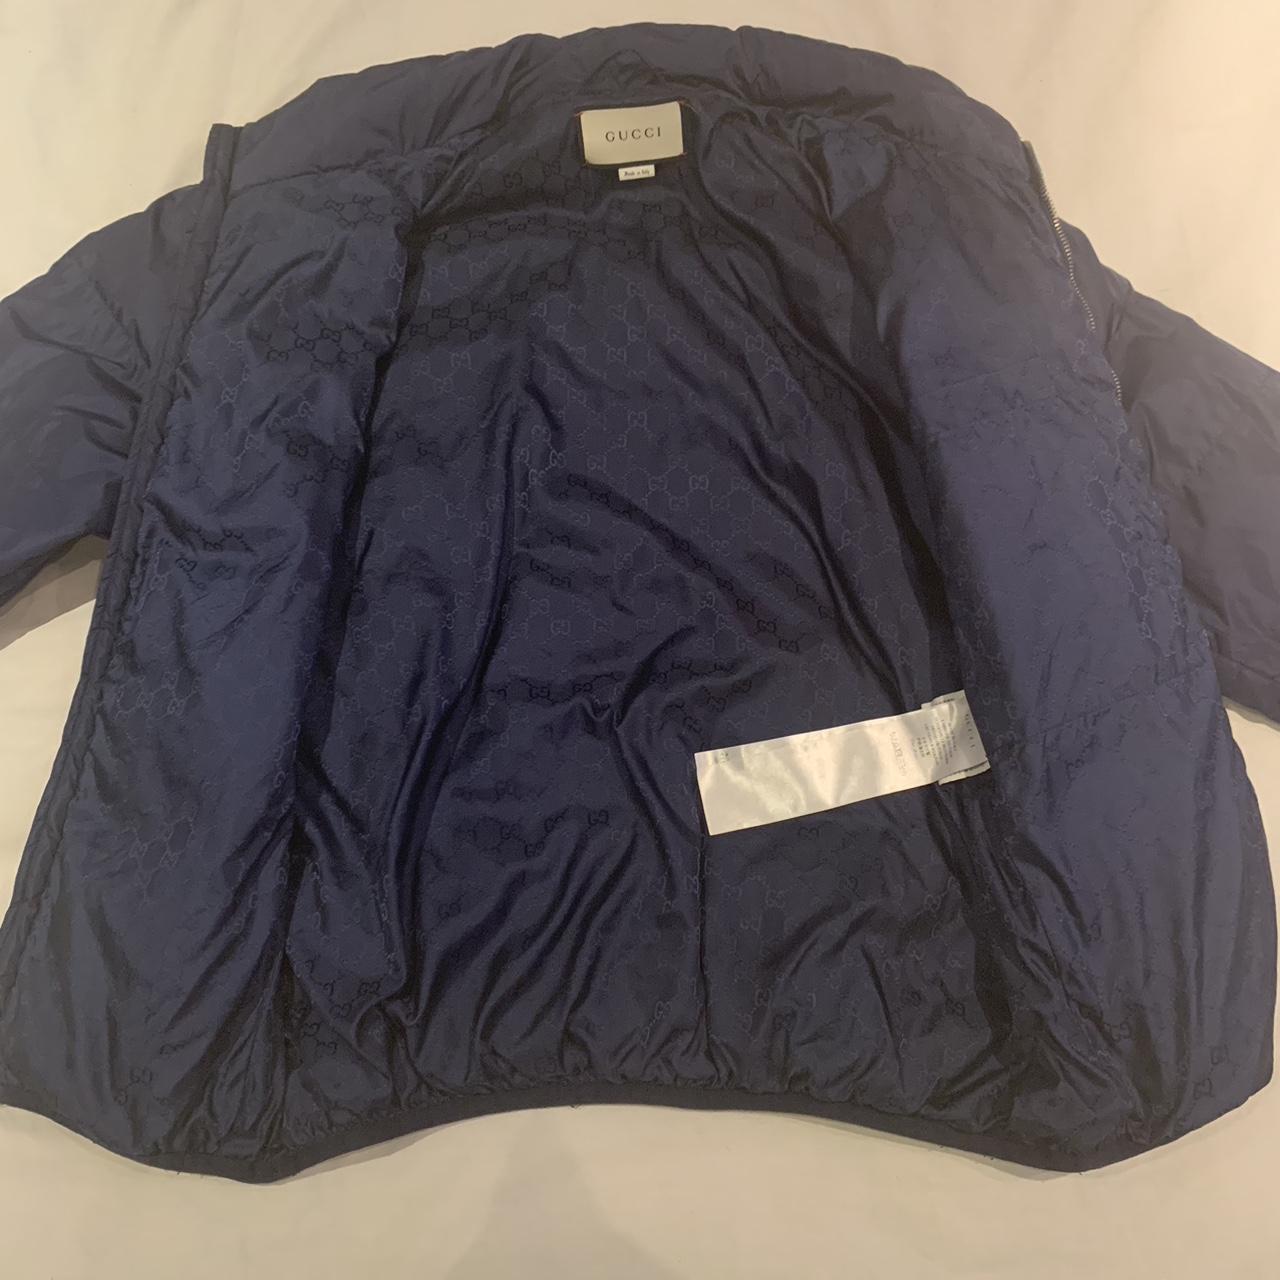 Gucci Navy Jacket - Size M Free Shipping Jacket... - Depop